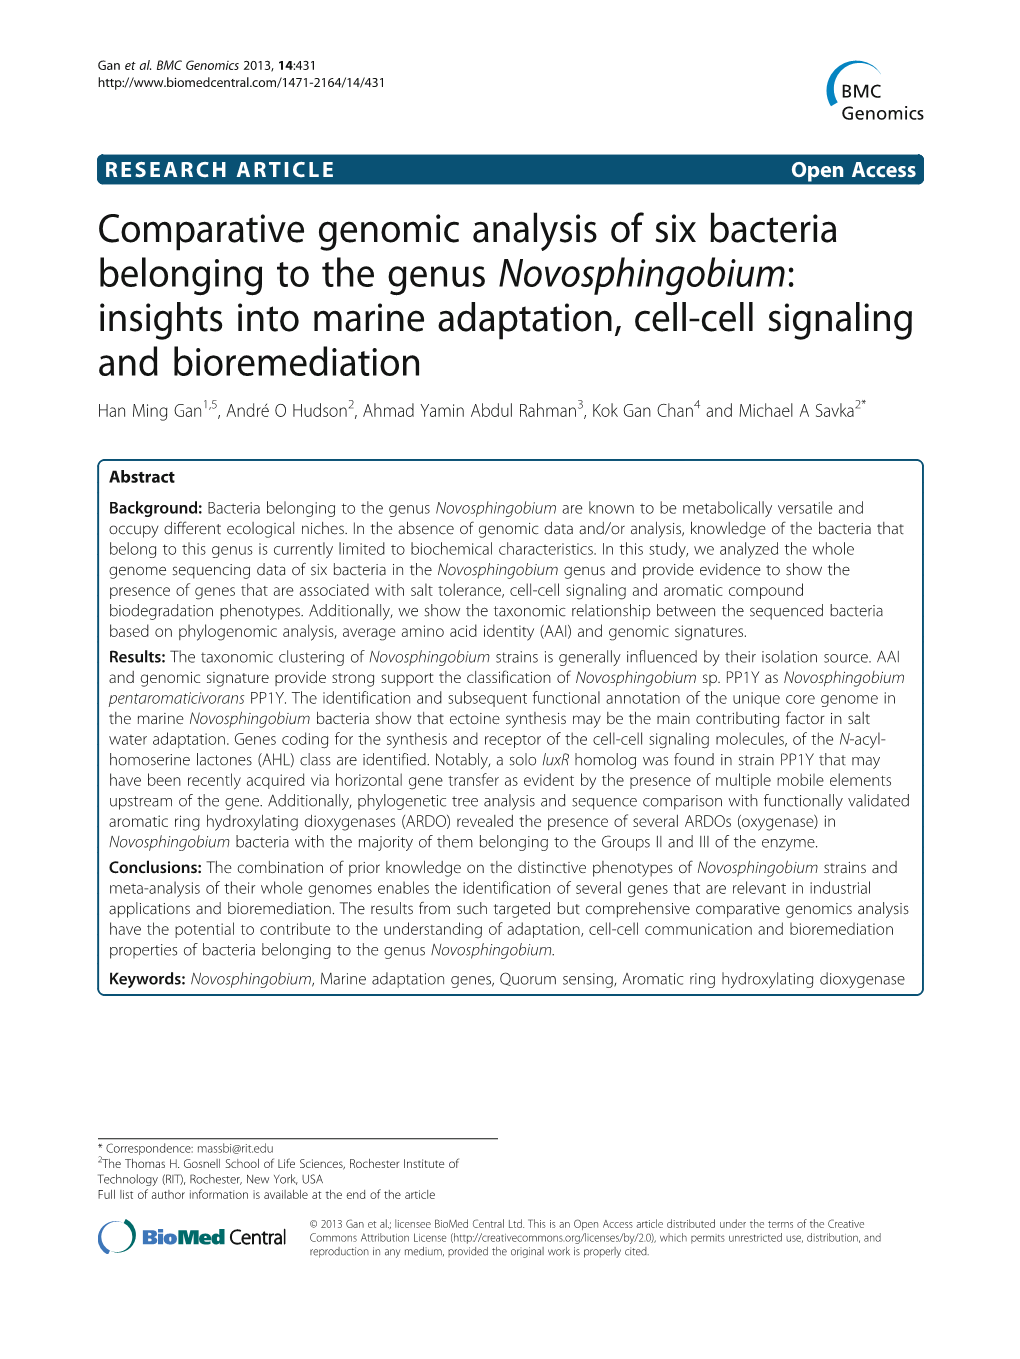 Comparative Genomic Analysis of Six Bacteria Belonging to the Genus